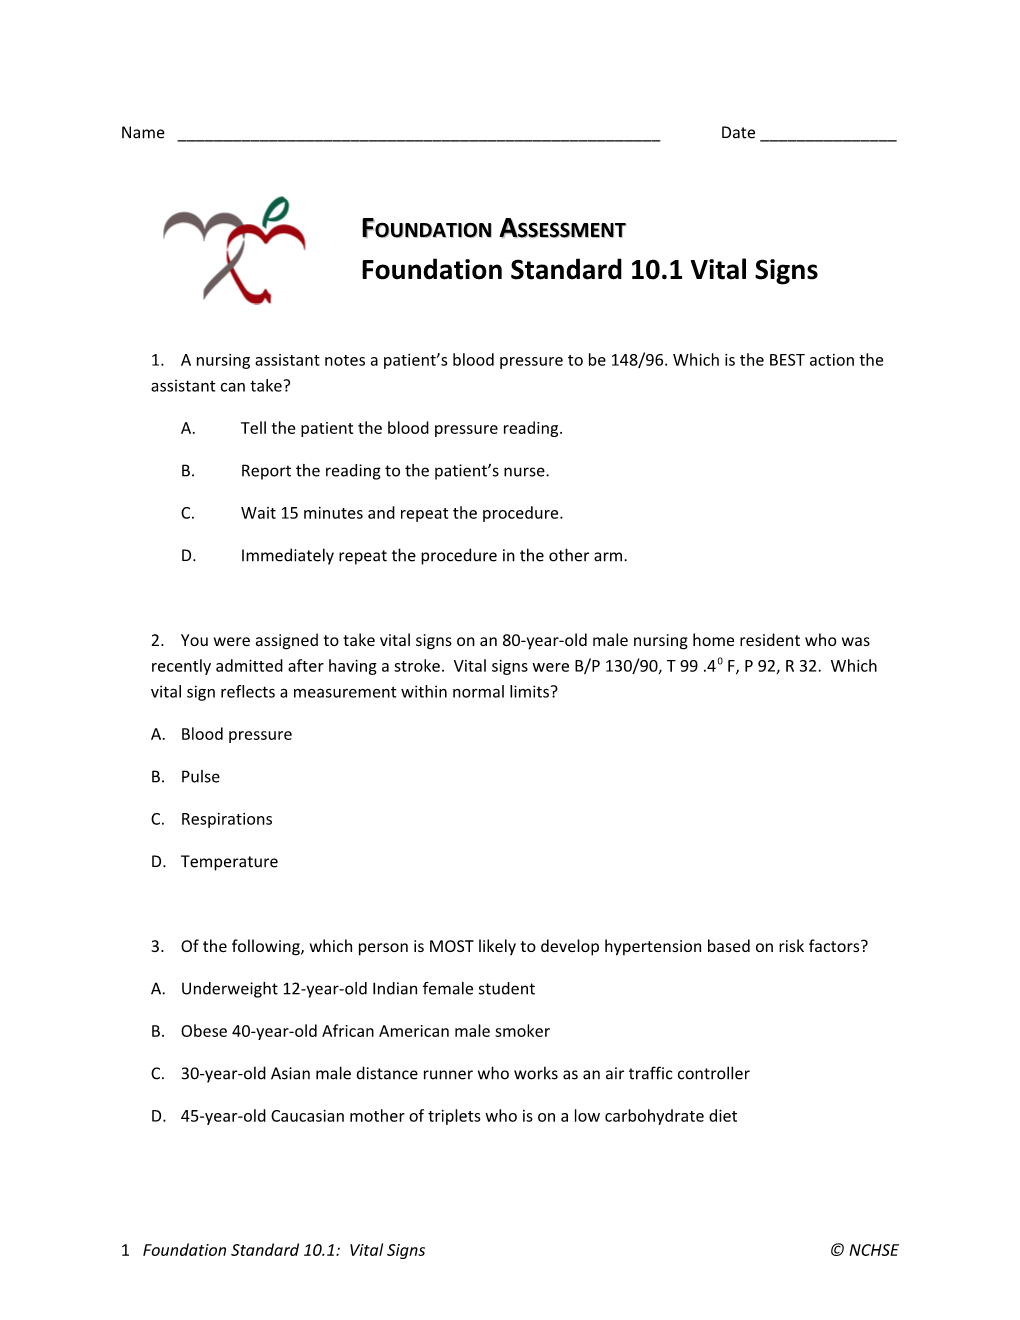 Foundation Standard 10.1 Vital Signs